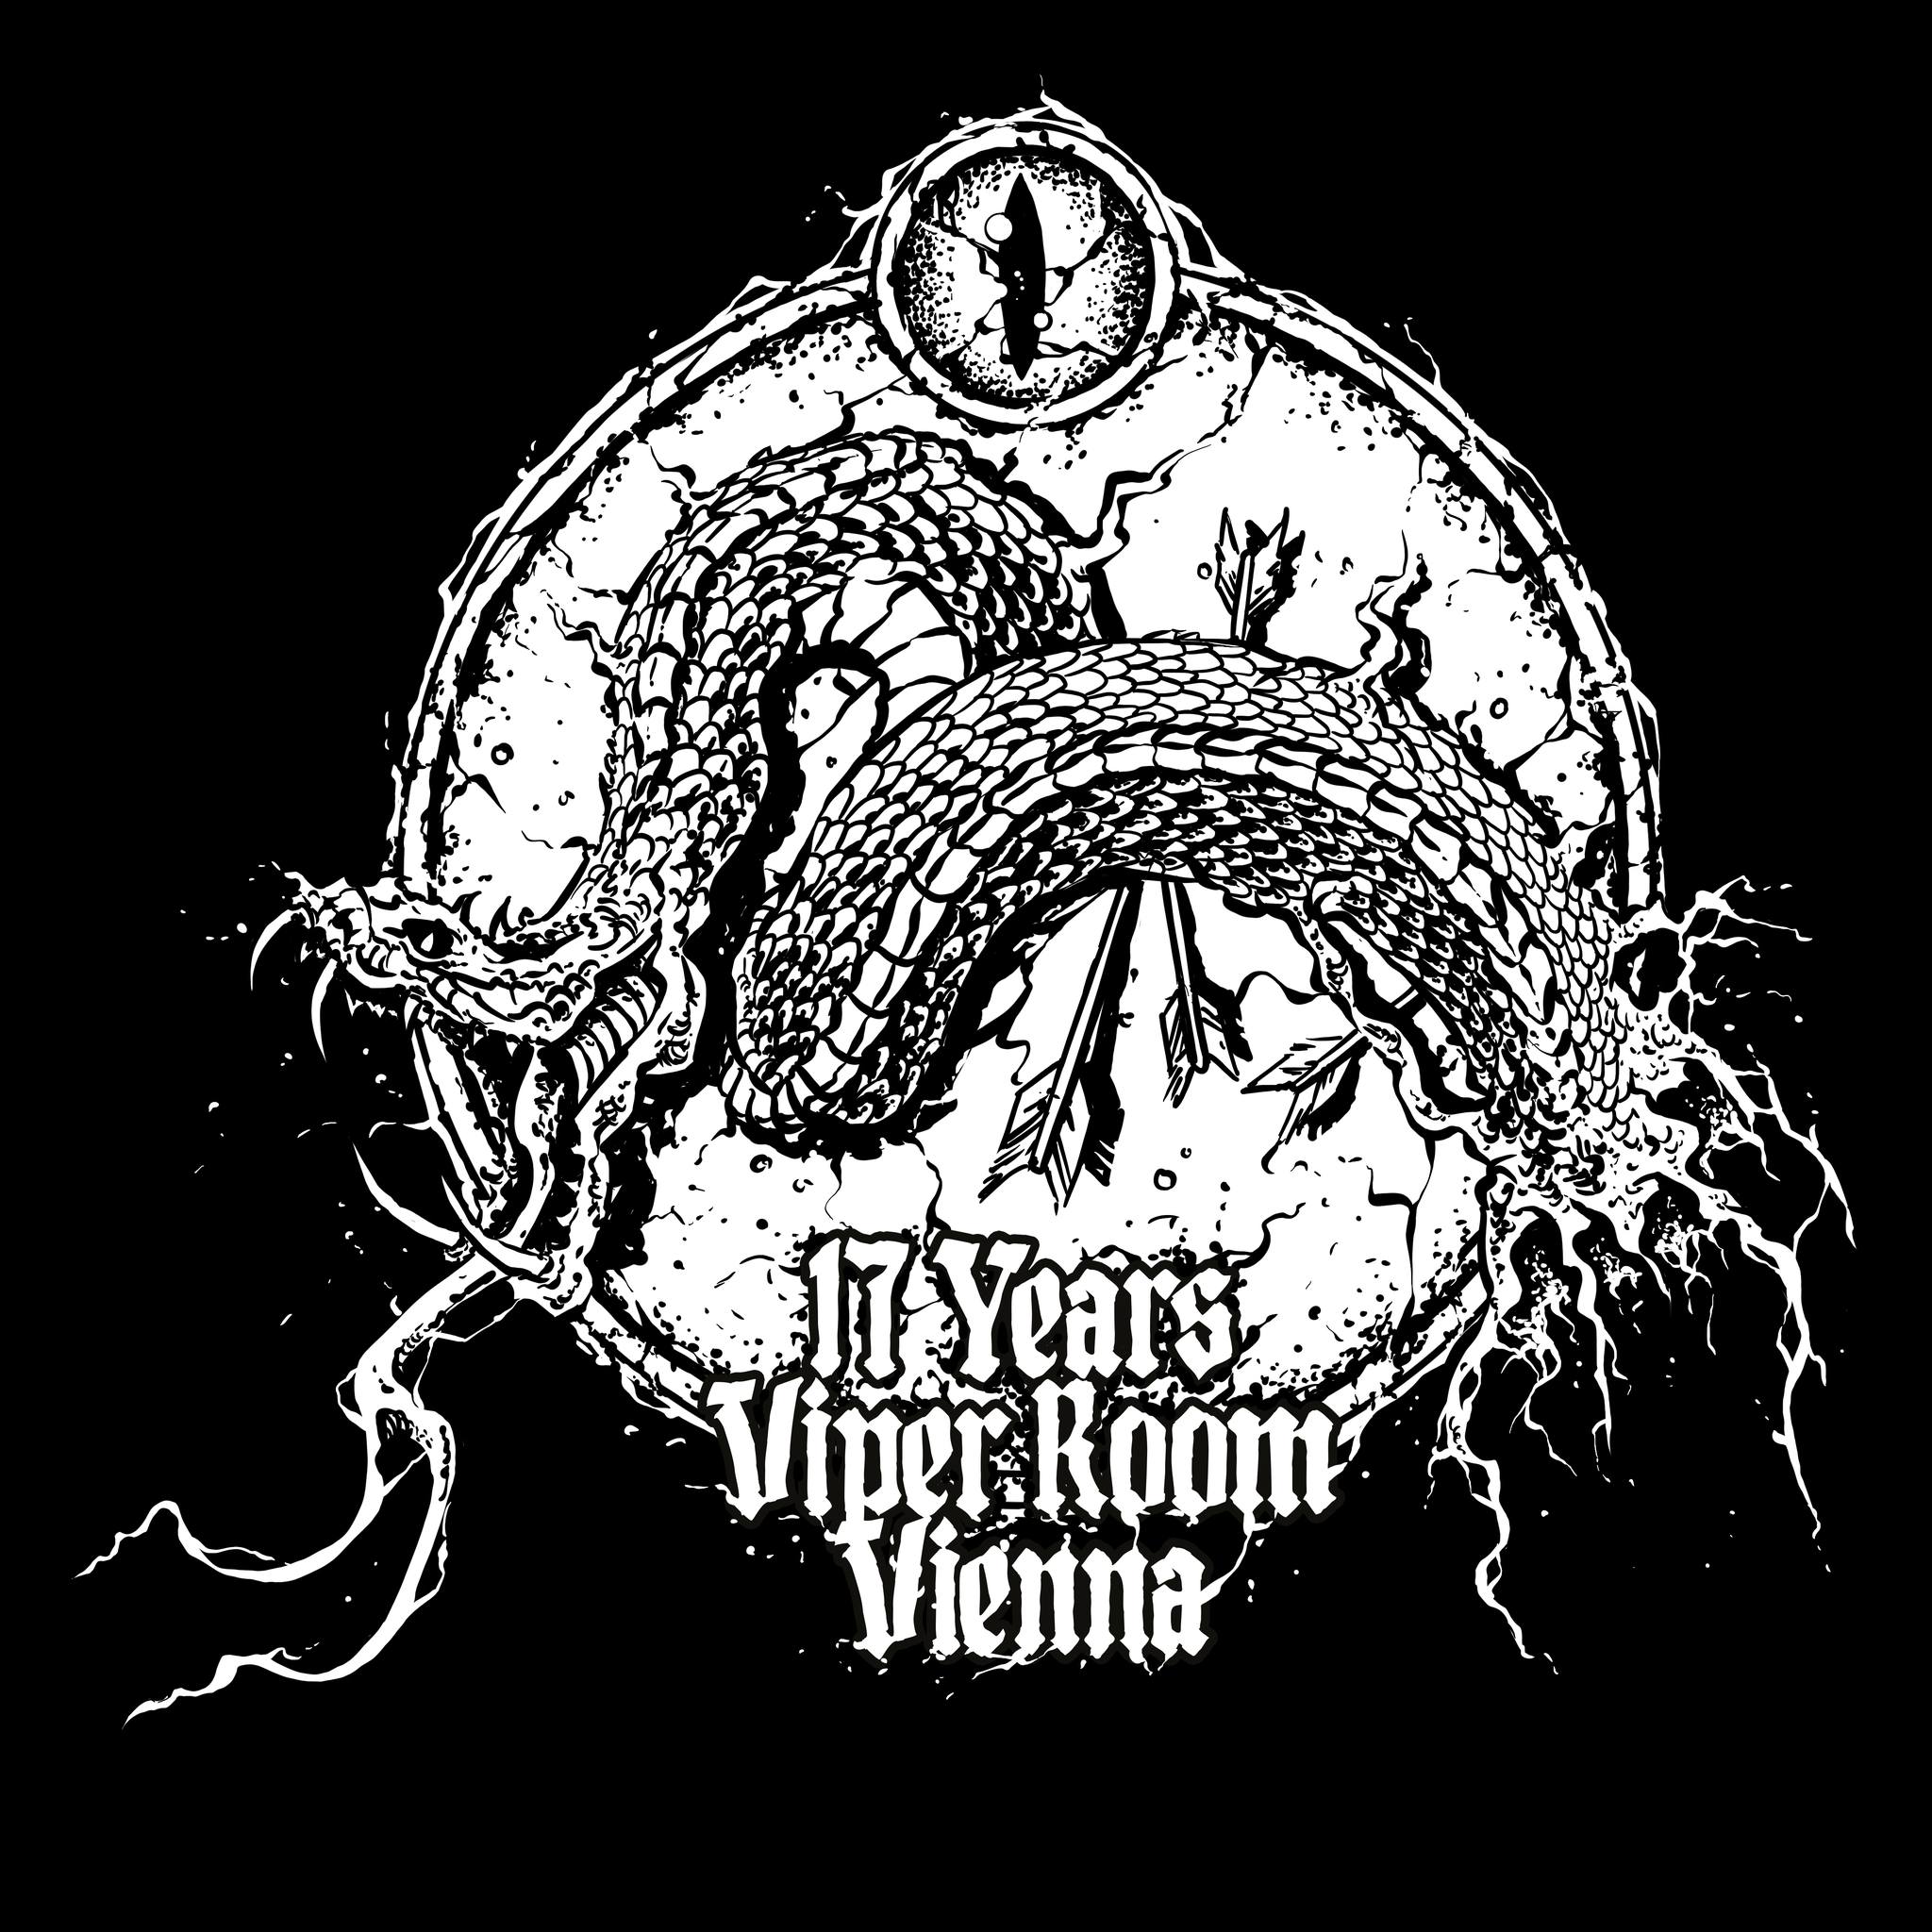 17 Jahre Viper Room